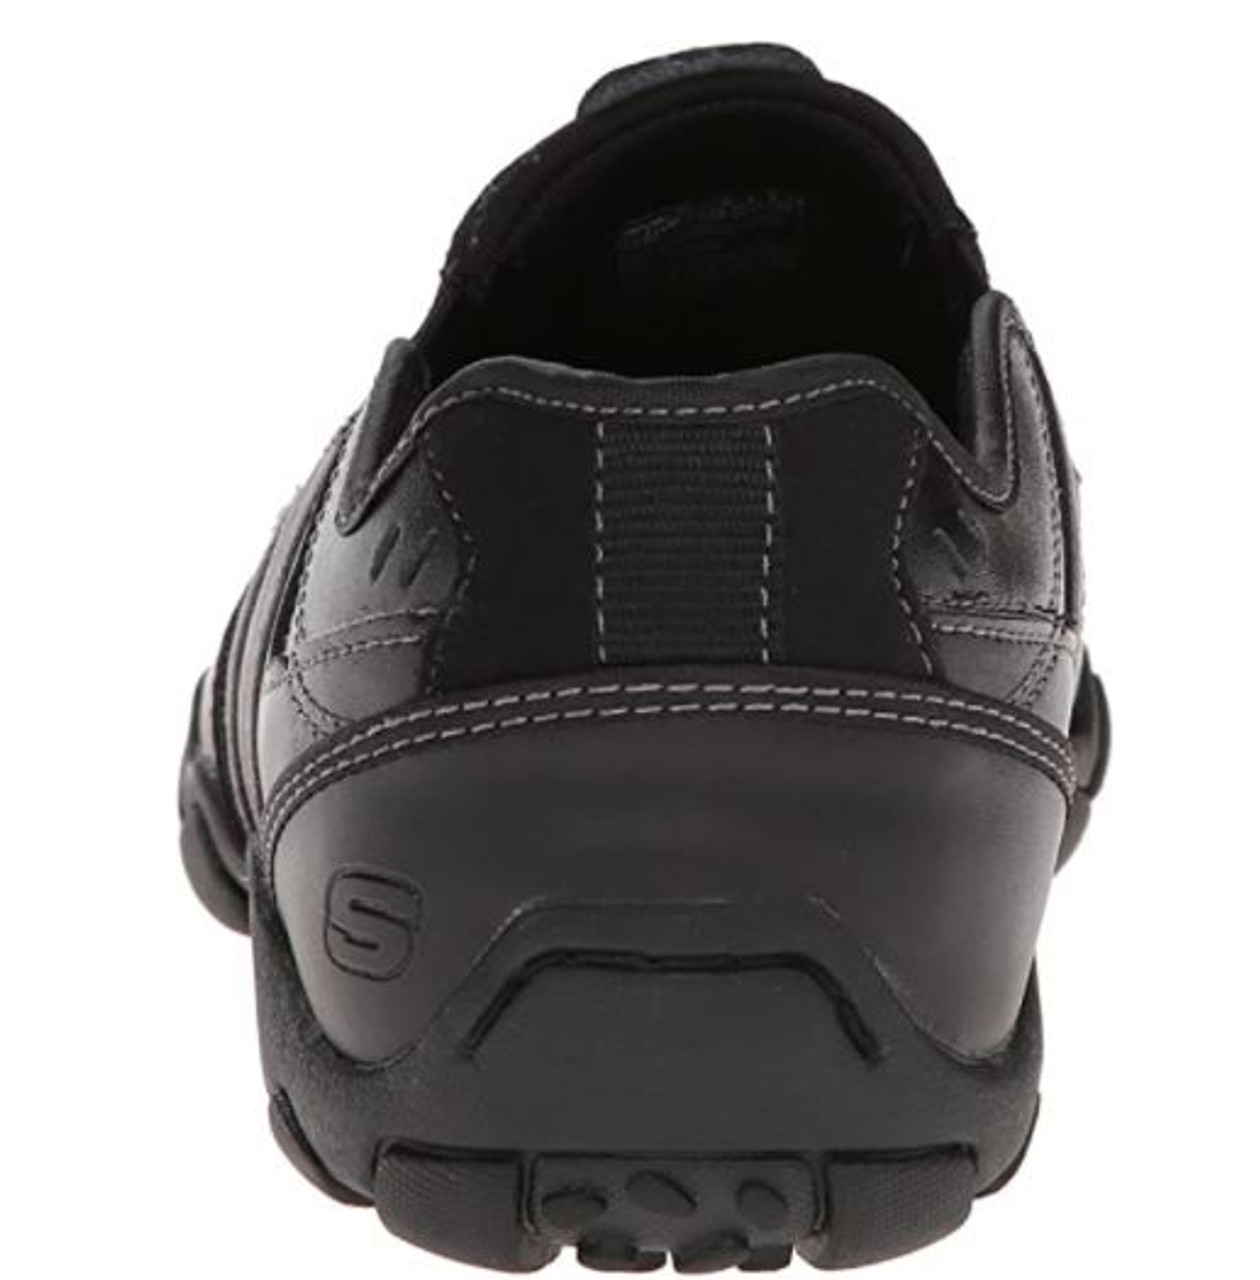 Footwear Skechers Men's Diameter Zinroy Slip-On Black Leather Loafer ...